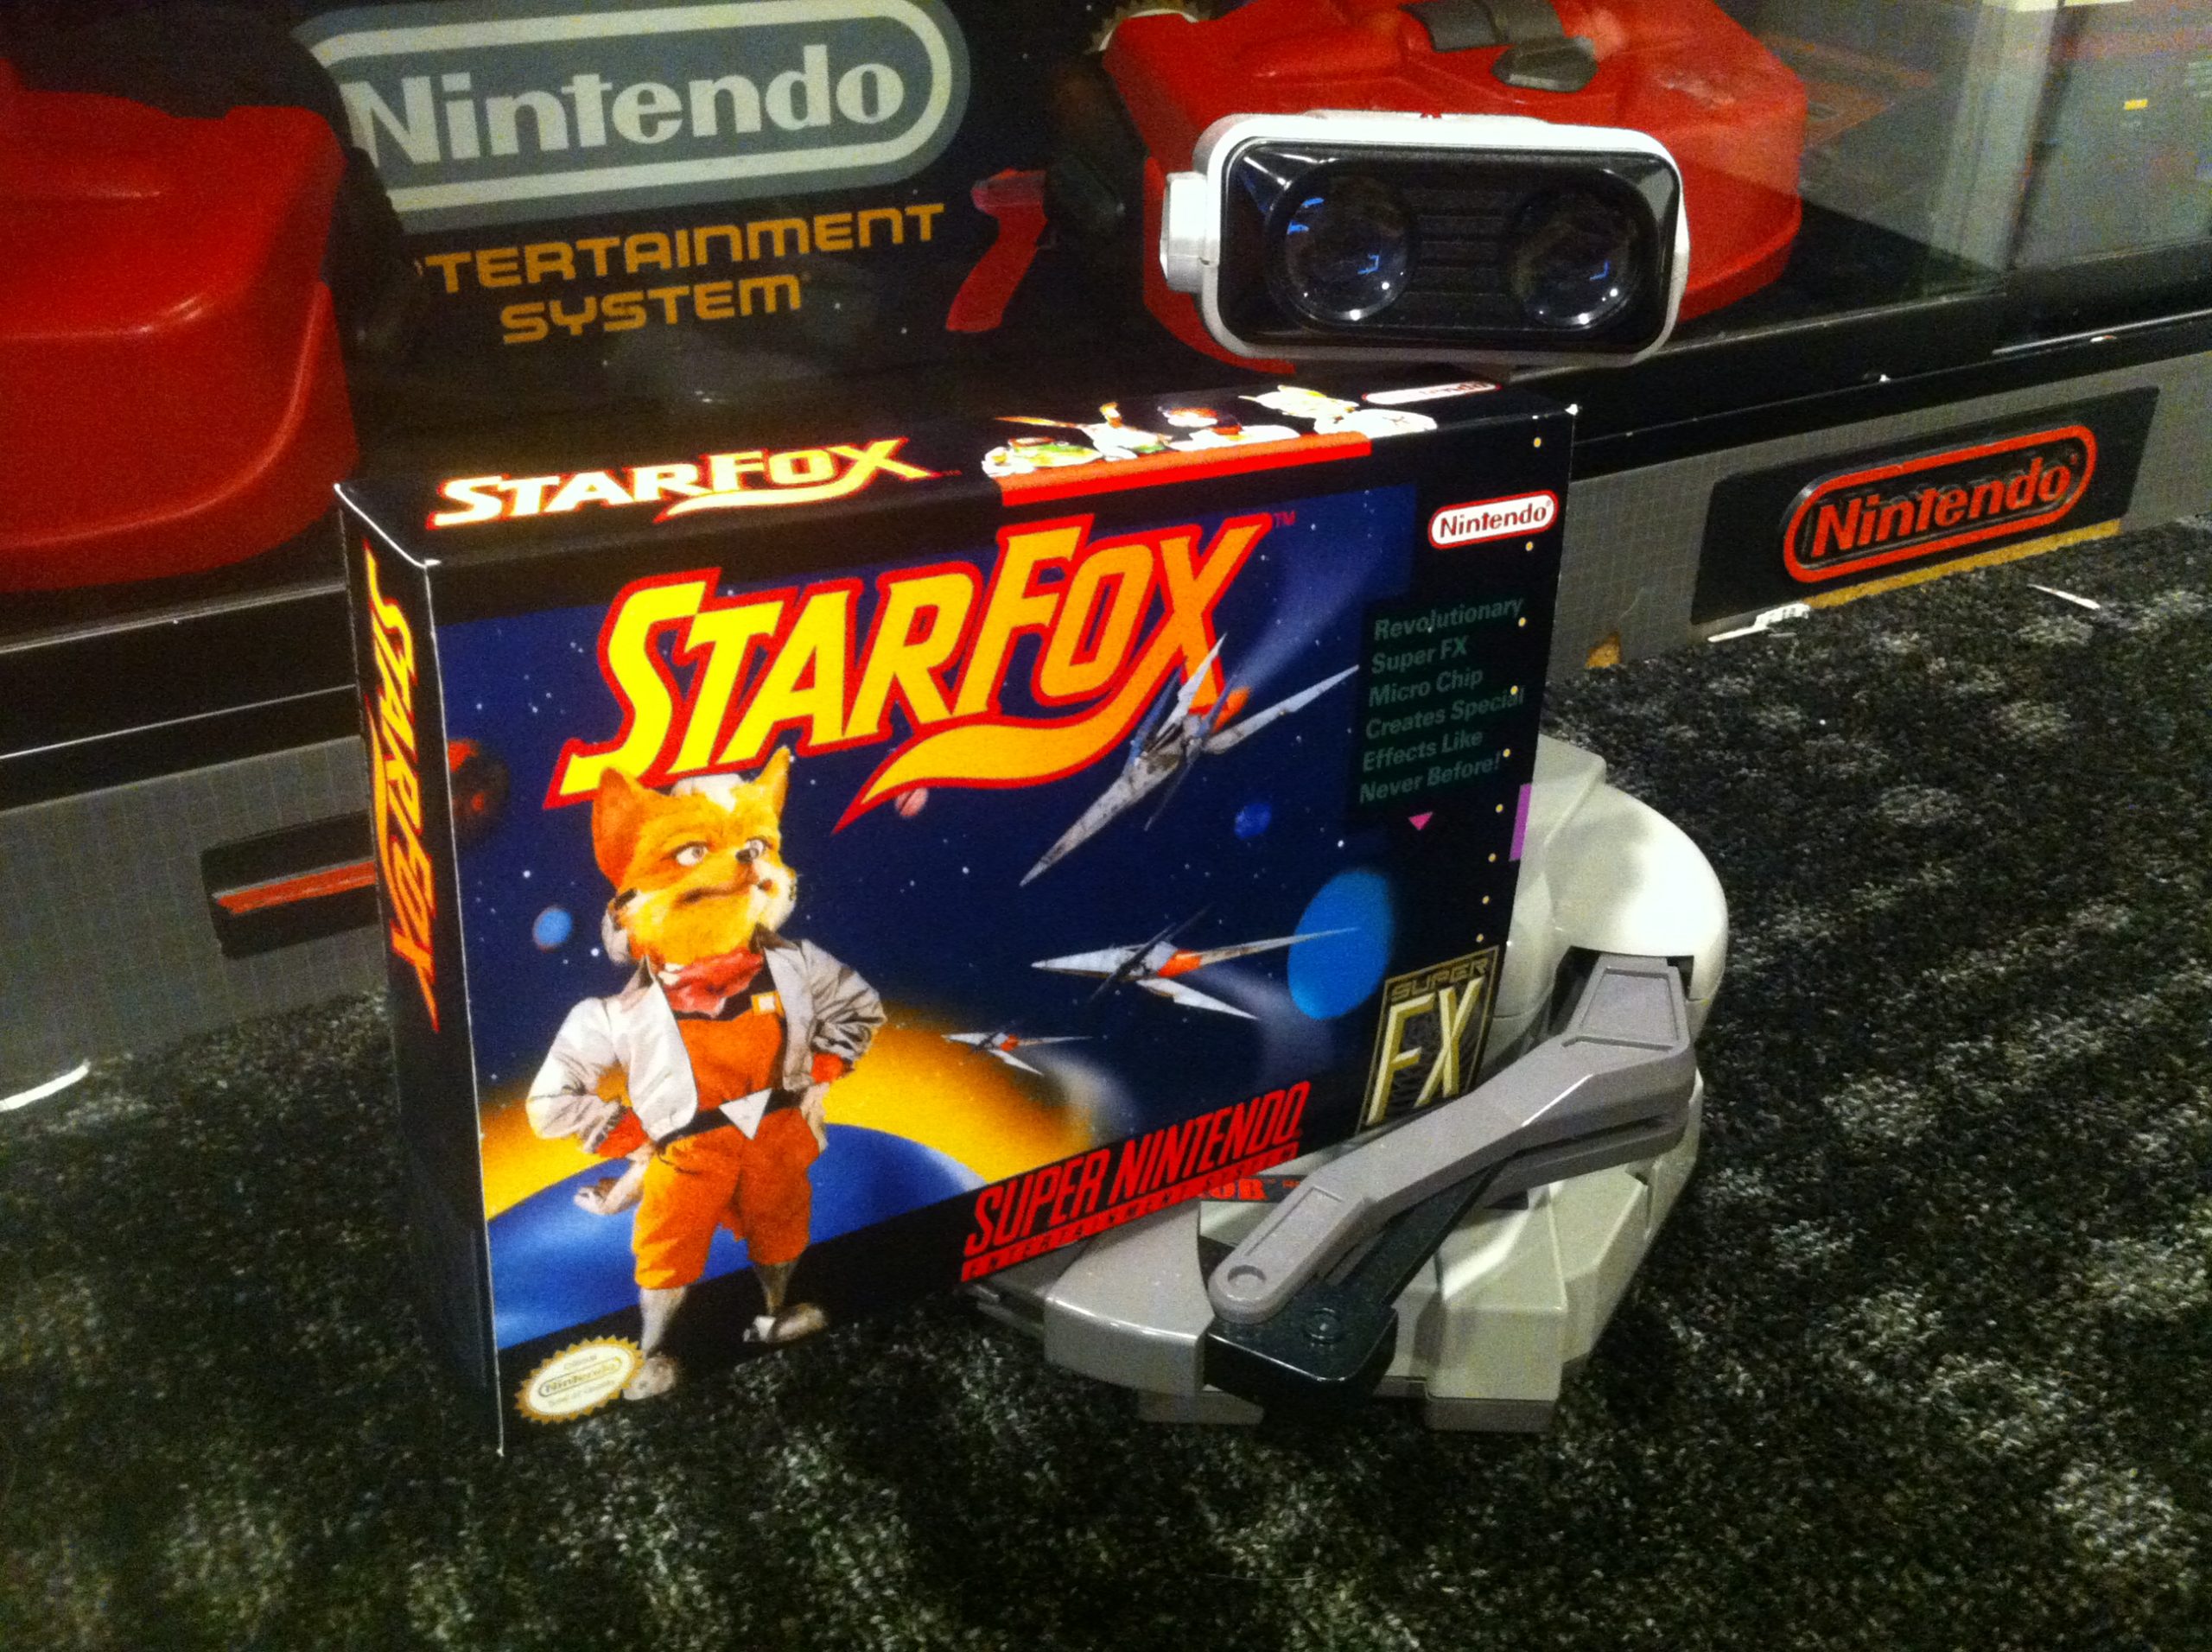 Star Fox, Super Nintendo